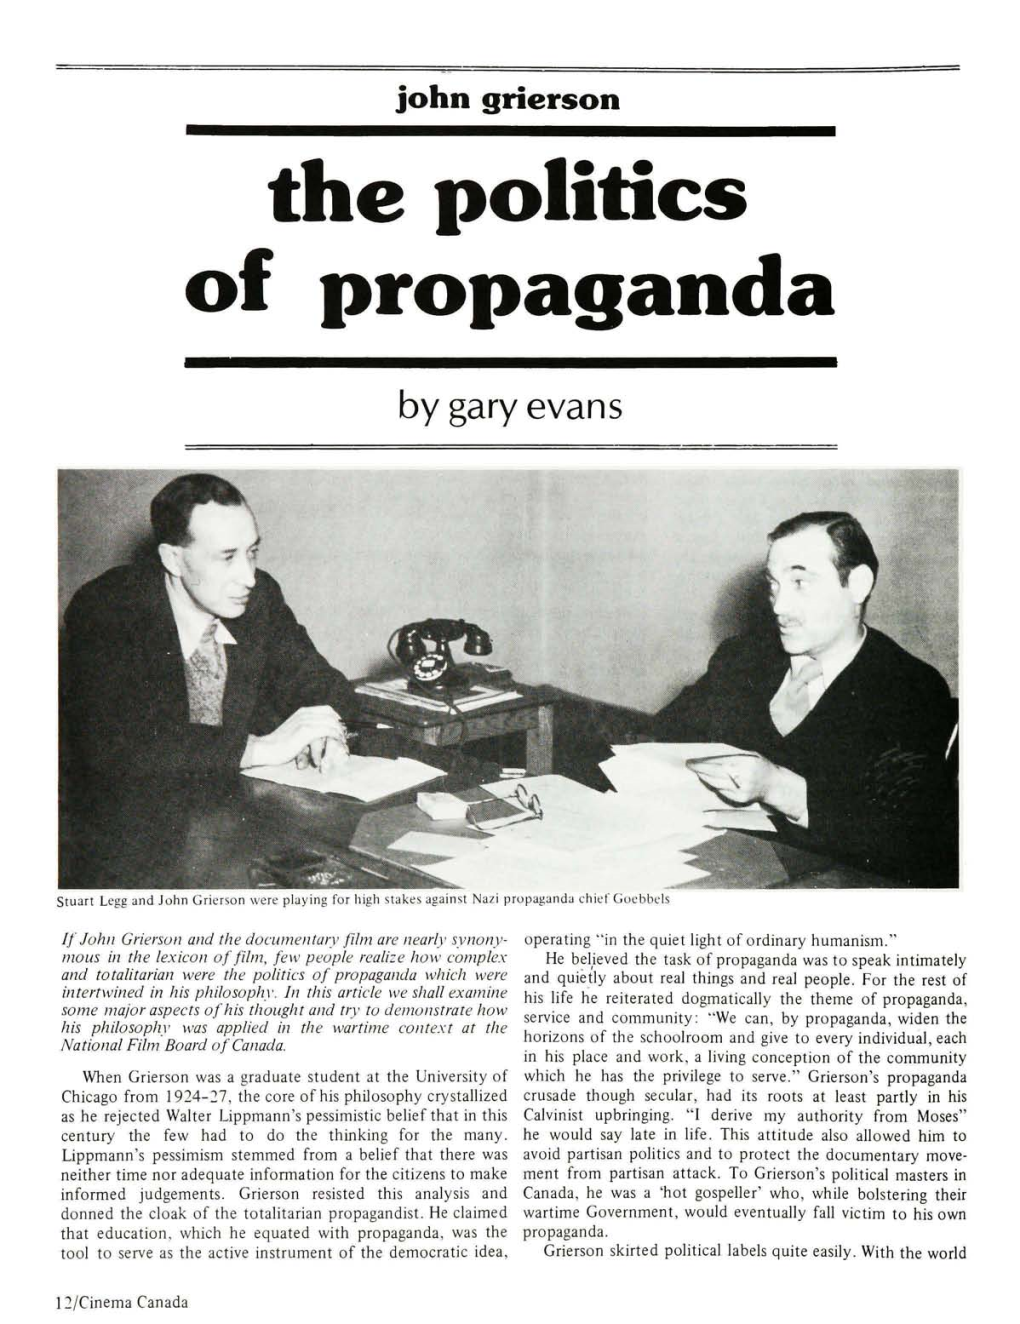 The Politics of Propaganda